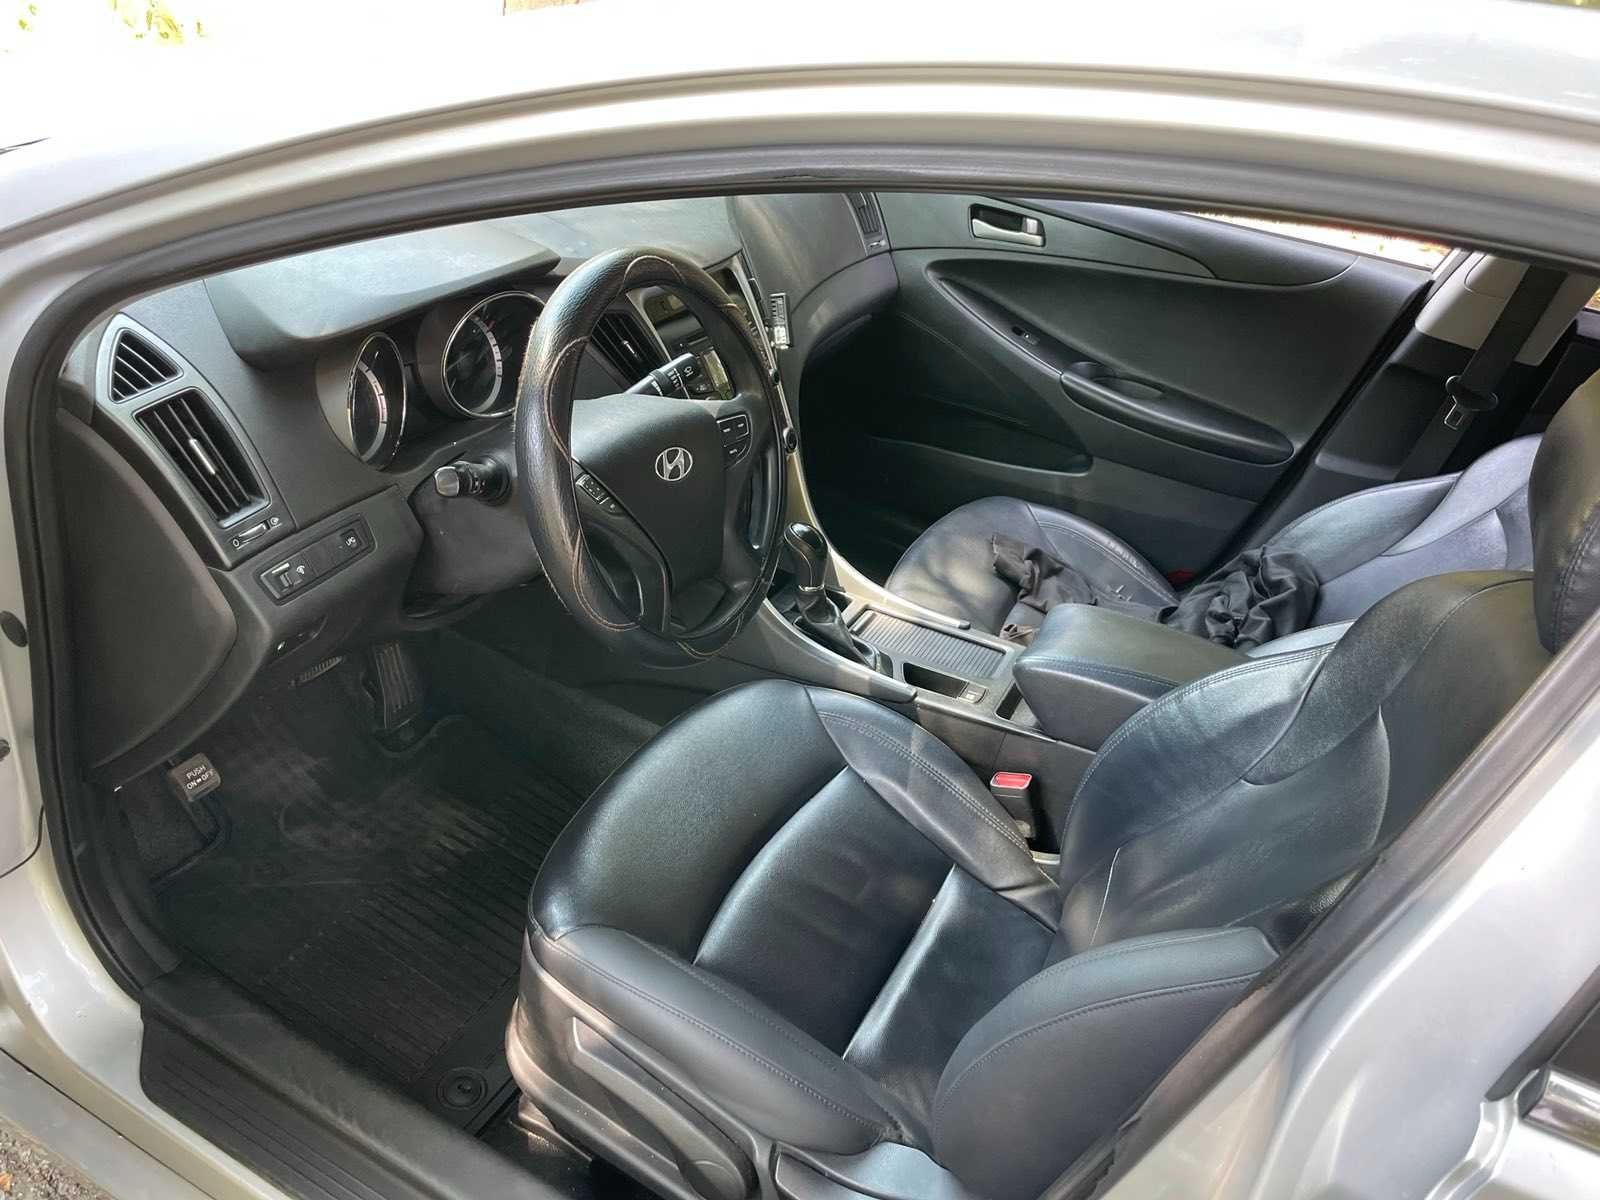 Аренда Авто БЕЗ ЗАЛОГА Hyundai Sonata 3600 с Правом Выкупа Под Выкуп